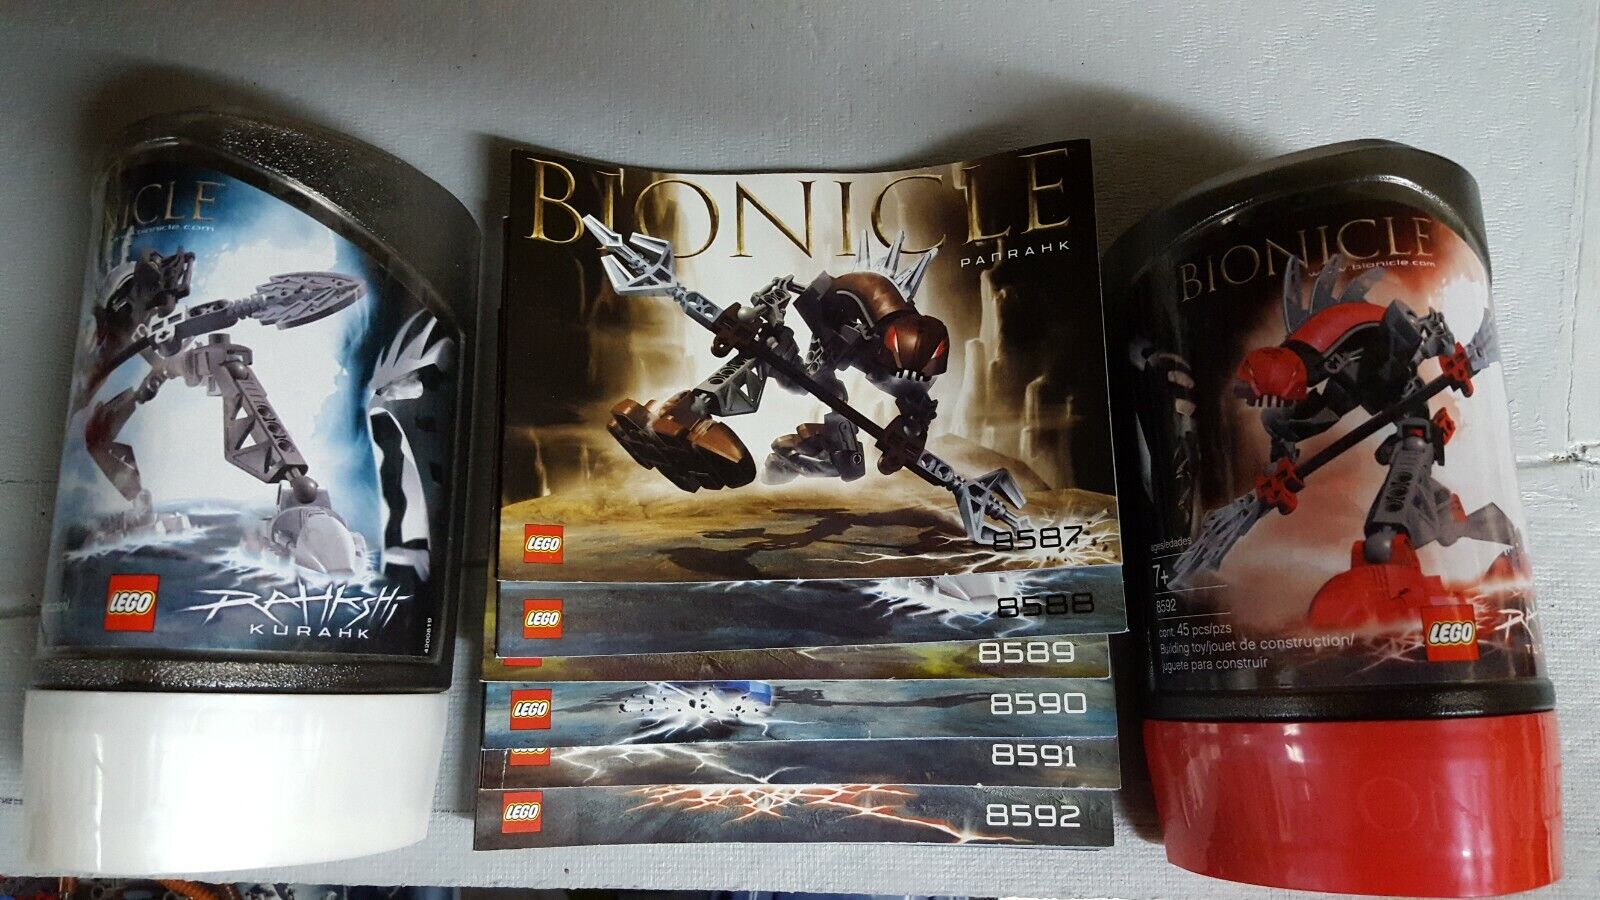 LEGO Bionicle Rahkshi Complete Set of 6: 8587 8588 8589 8590 8591 8592 |  eBay